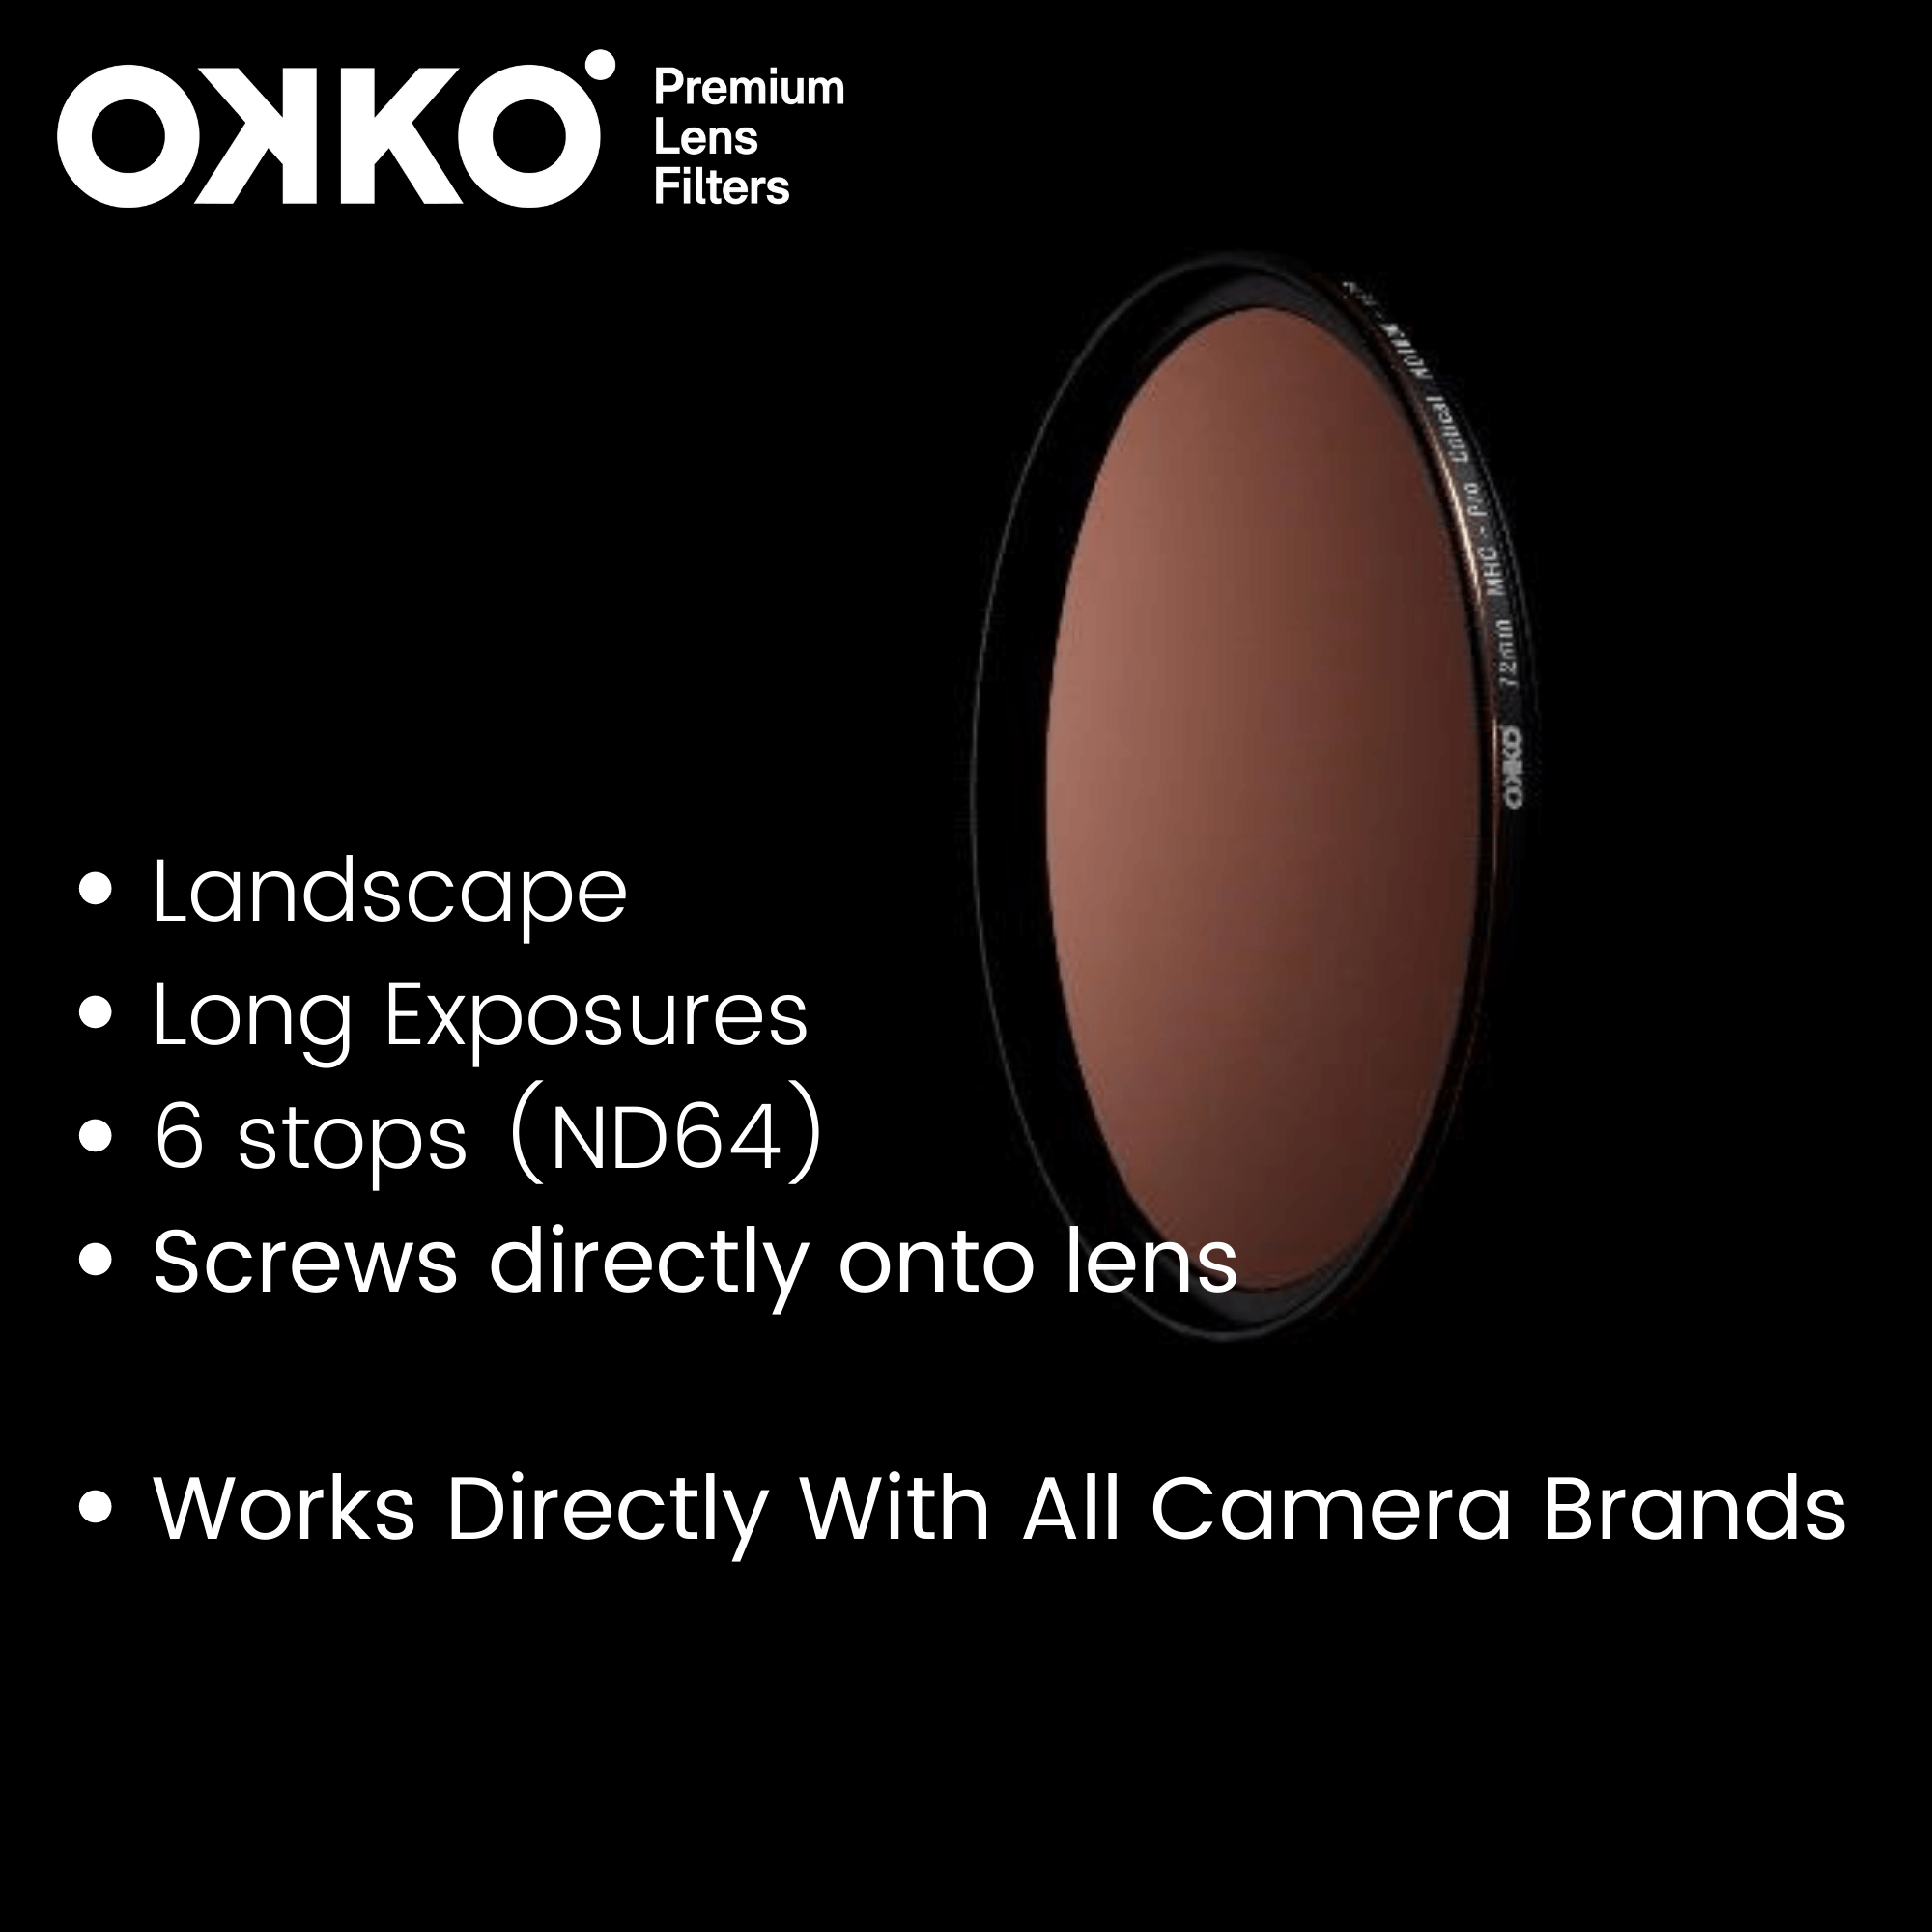 Okko Pro Neutral Density 6 Stop Filter